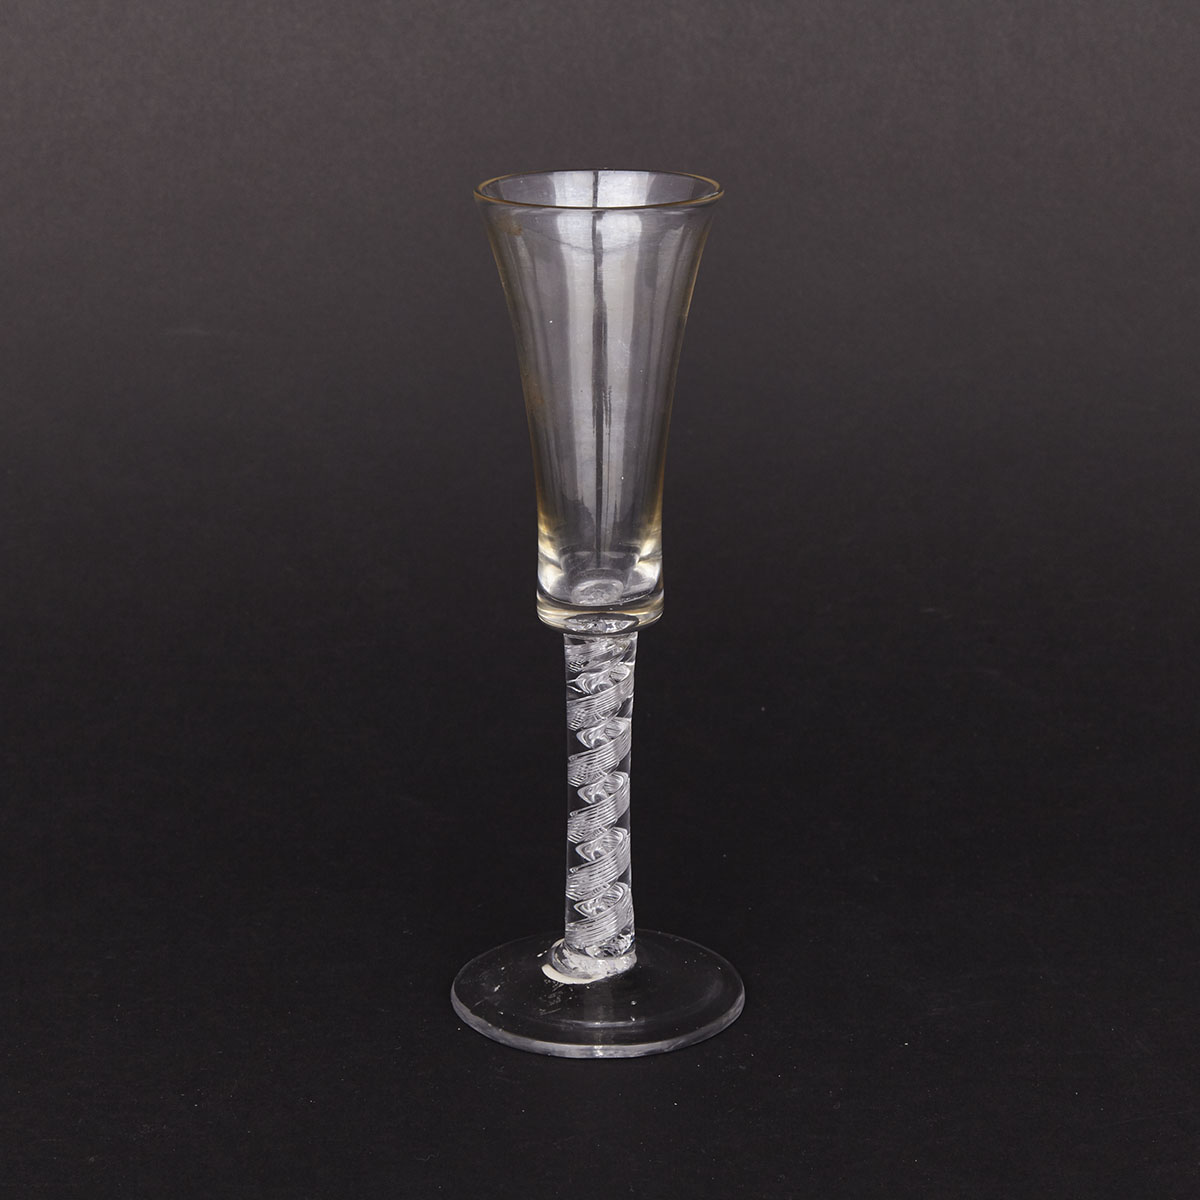 English Air Twist Stemmed Ale Glass, c.1750-60